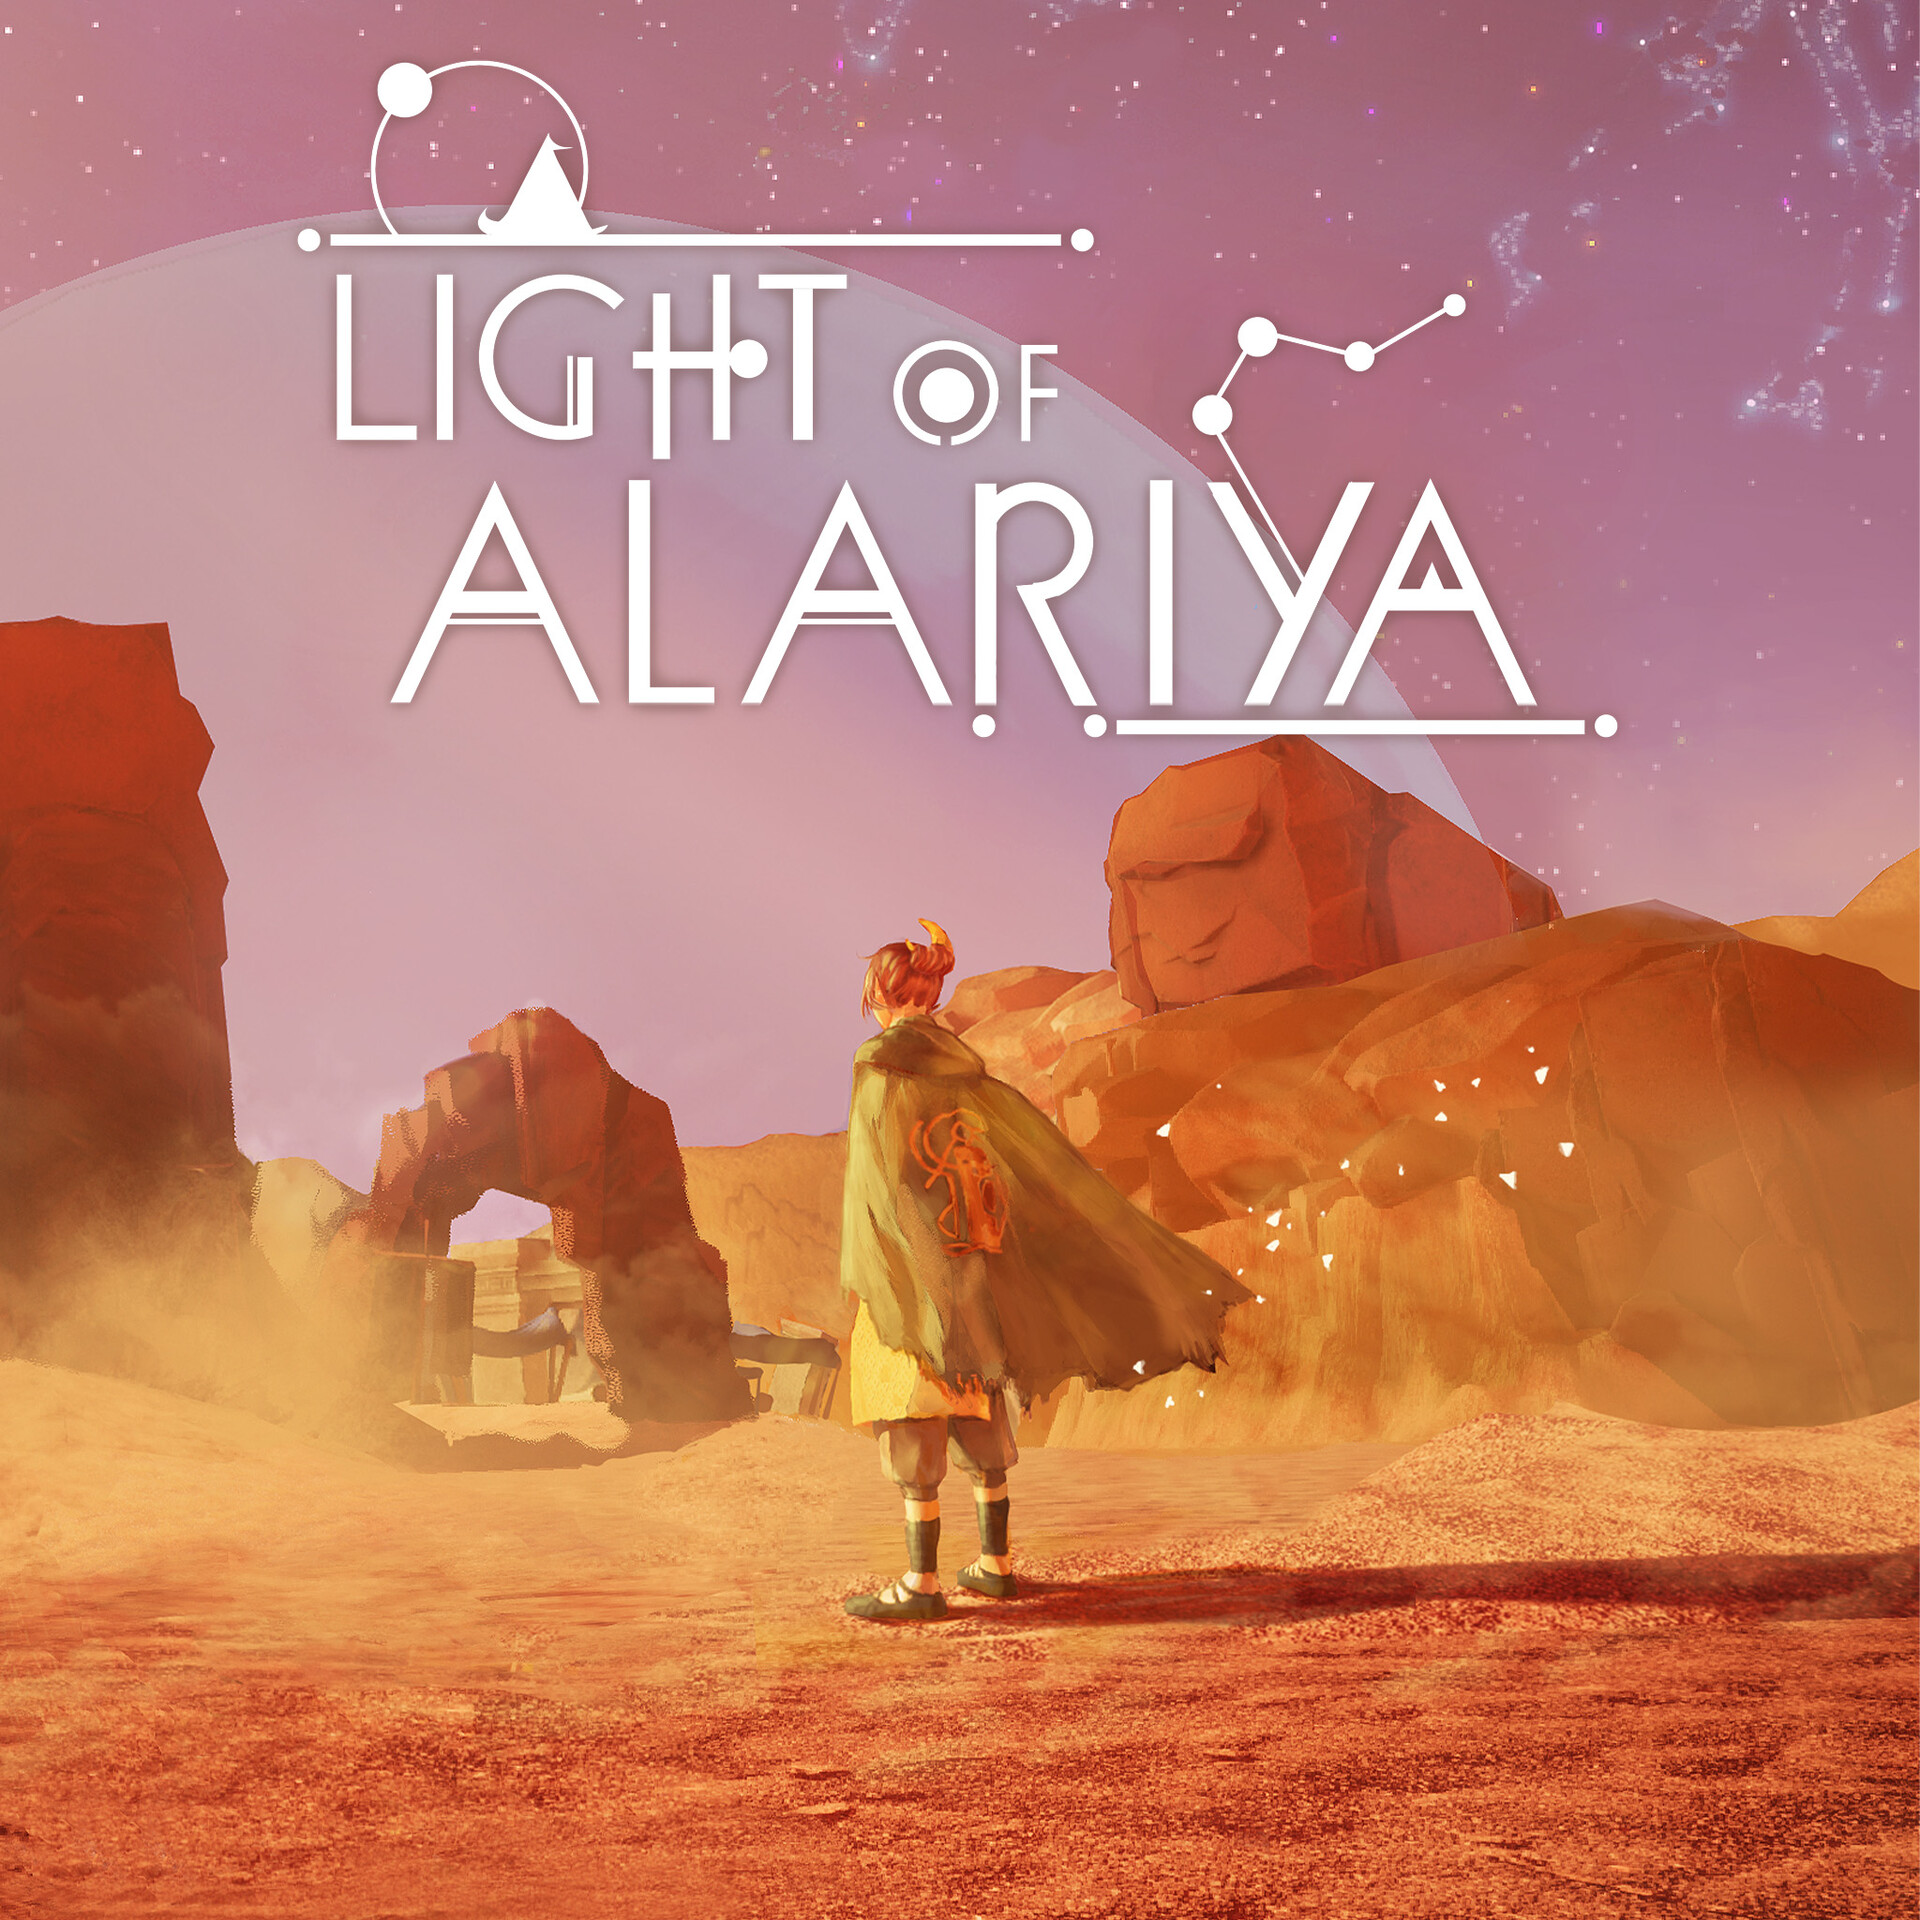 Light of Alariya download the new version for mac